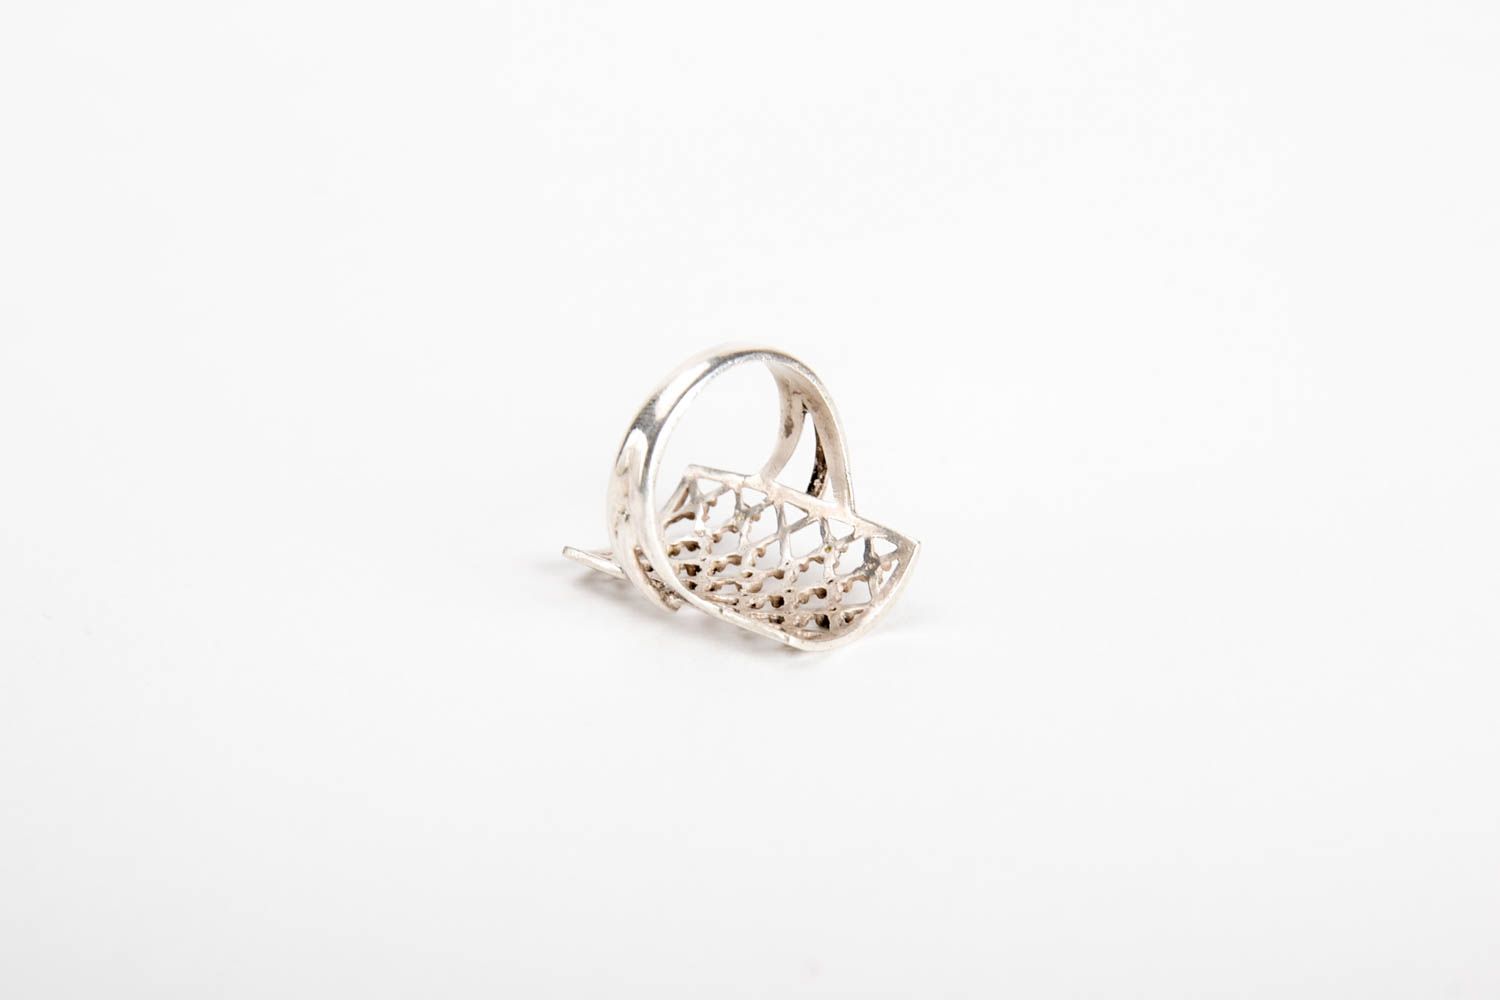 Unusual handmade silver ring beautiful jewellery cool jewelry designs gift ideas photo 5